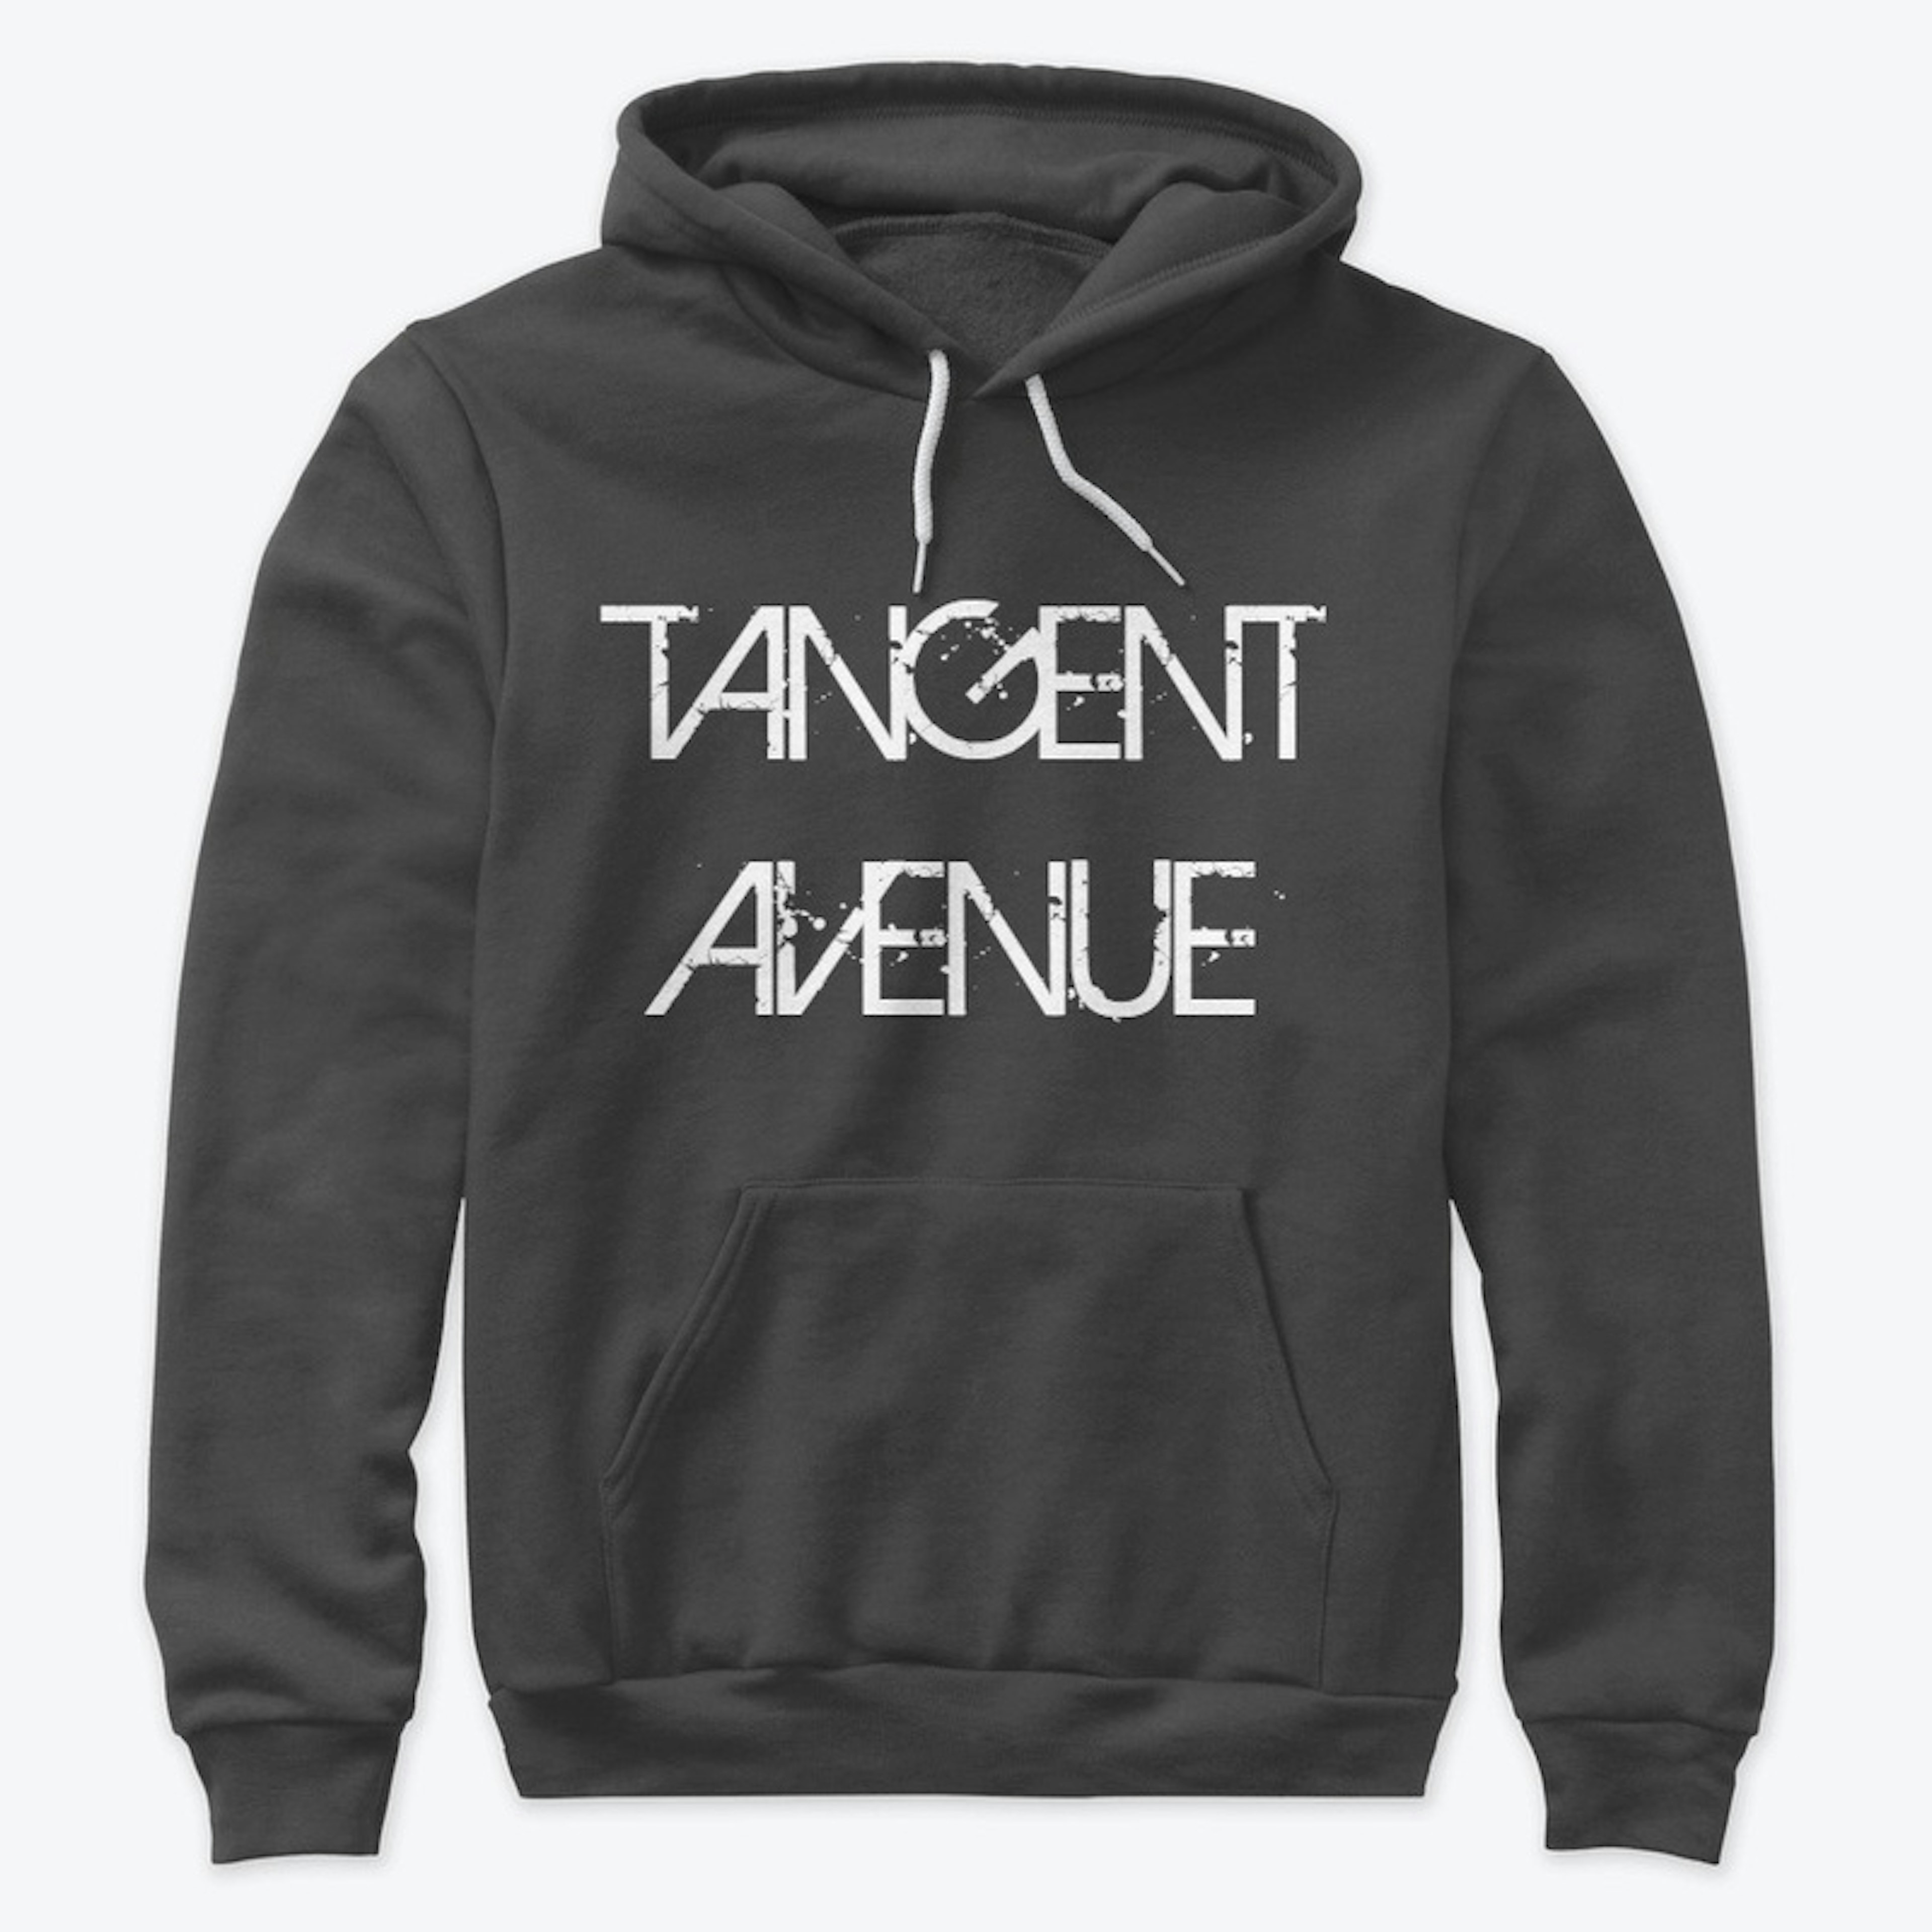 Tangent Avenue